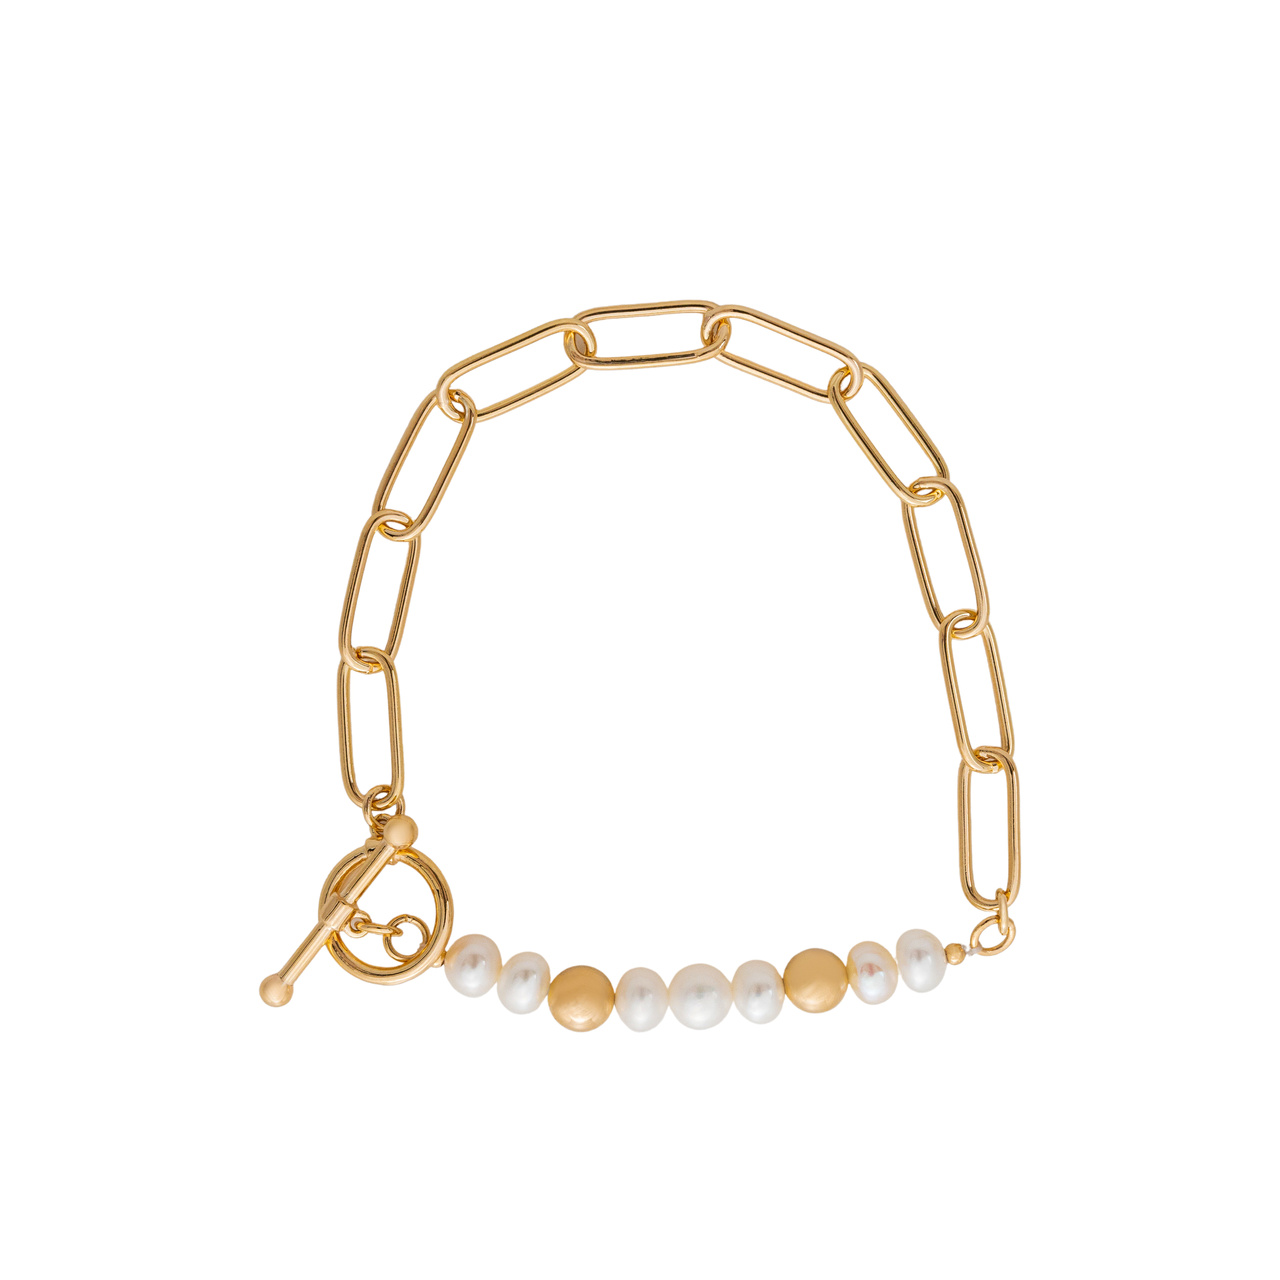 Bracelet, Gemma 1 - Gold